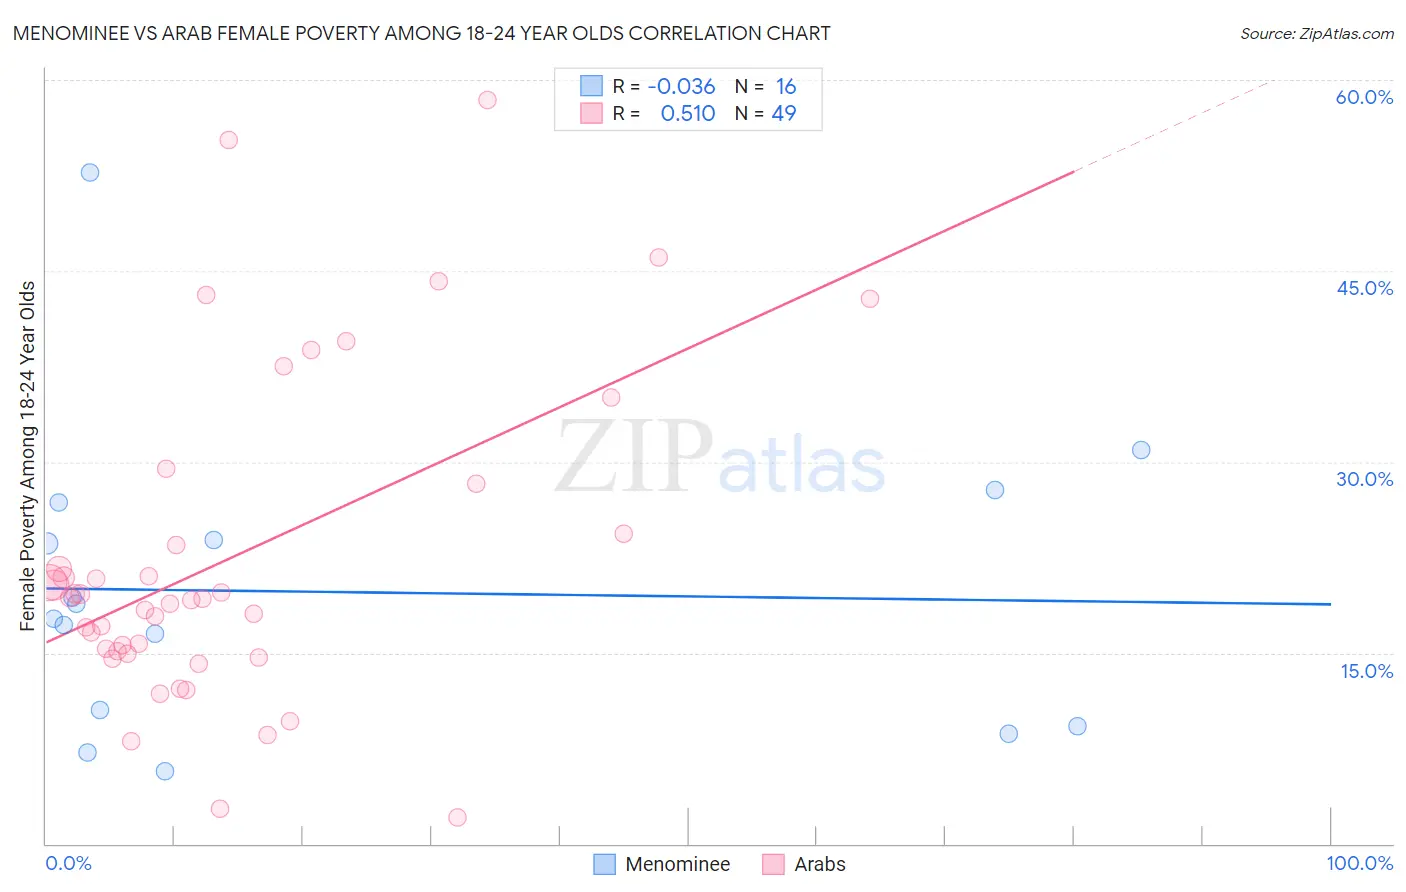 Menominee vs Arab Female Poverty Among 18-24 Year Olds